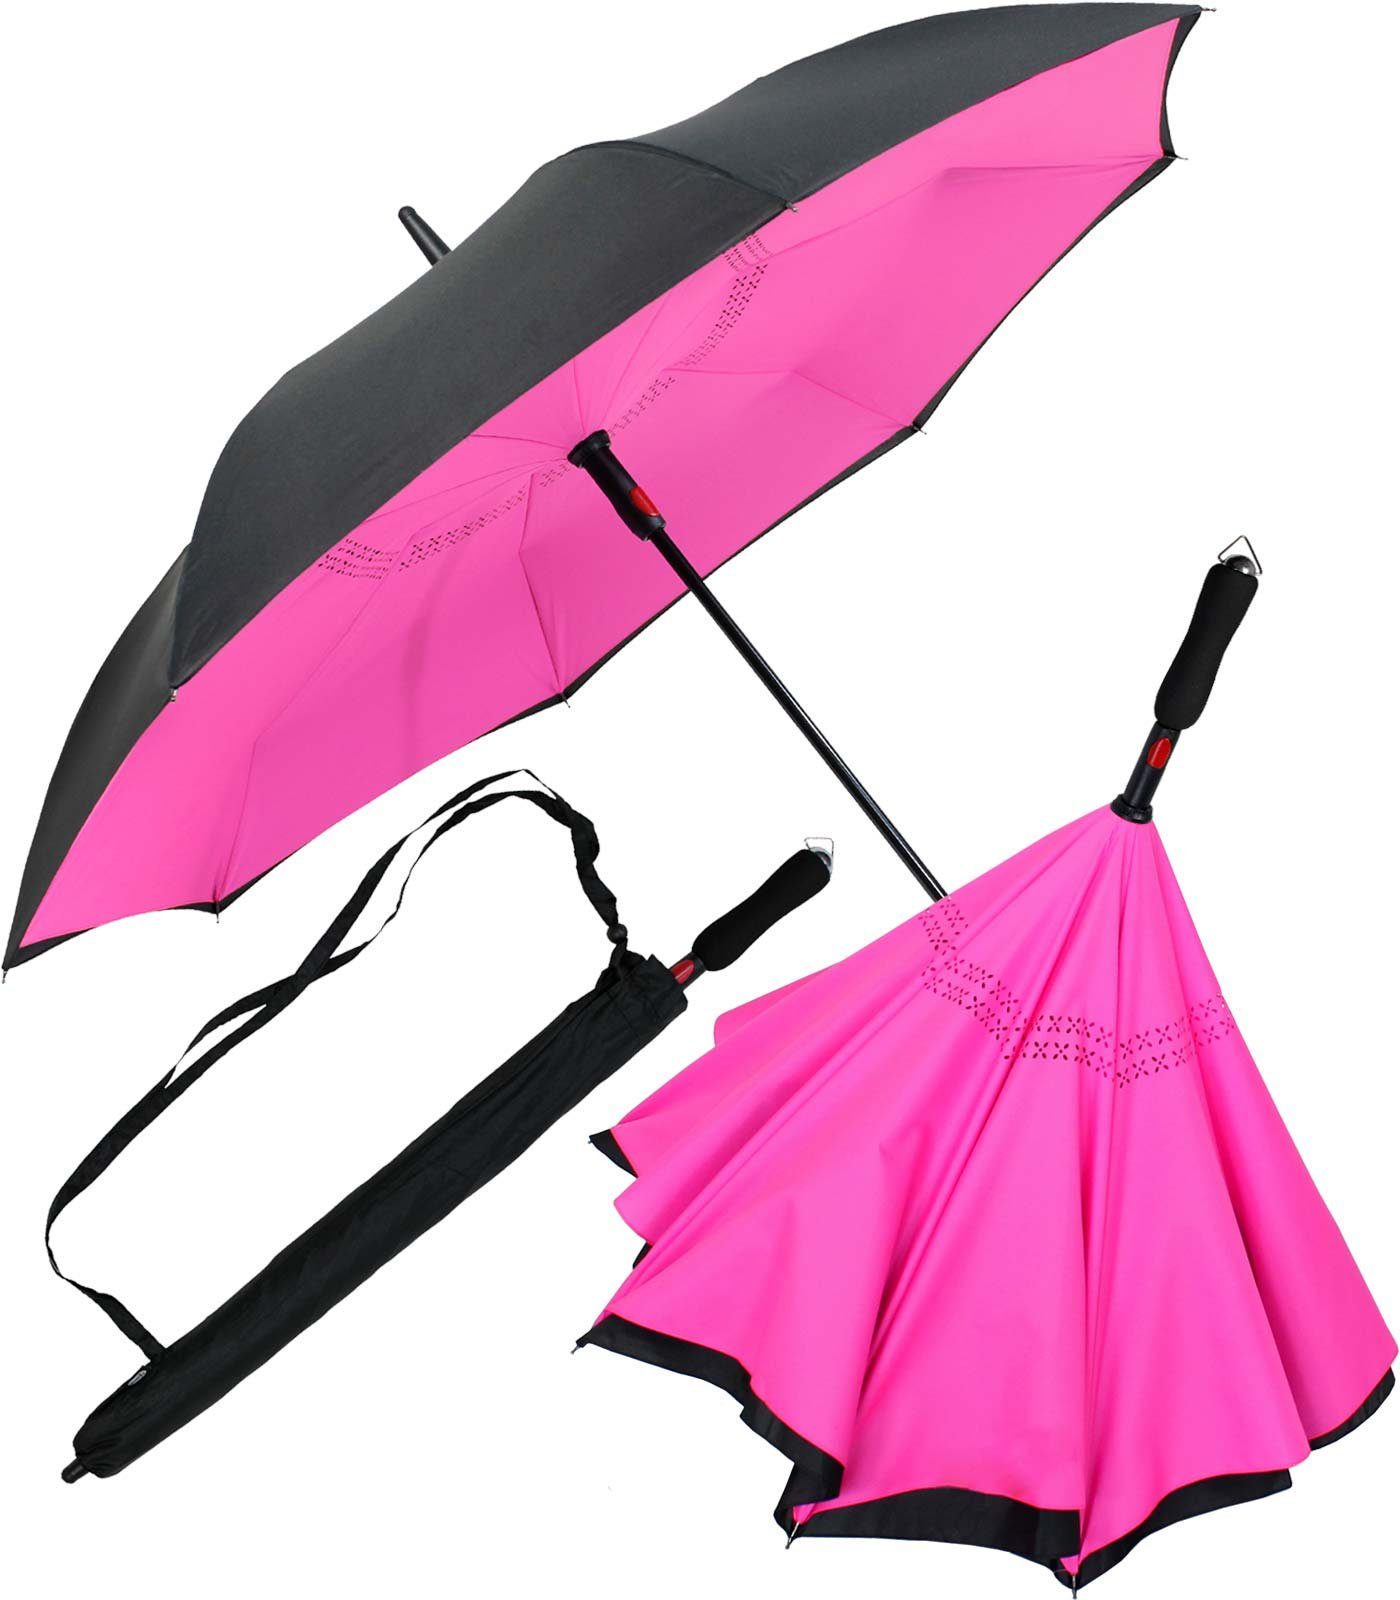 iX-brella Langregenschirm Reverse-Schirm - umgedreht zu öffnen mit Automatik, umgedreht schwarz-neon-pink